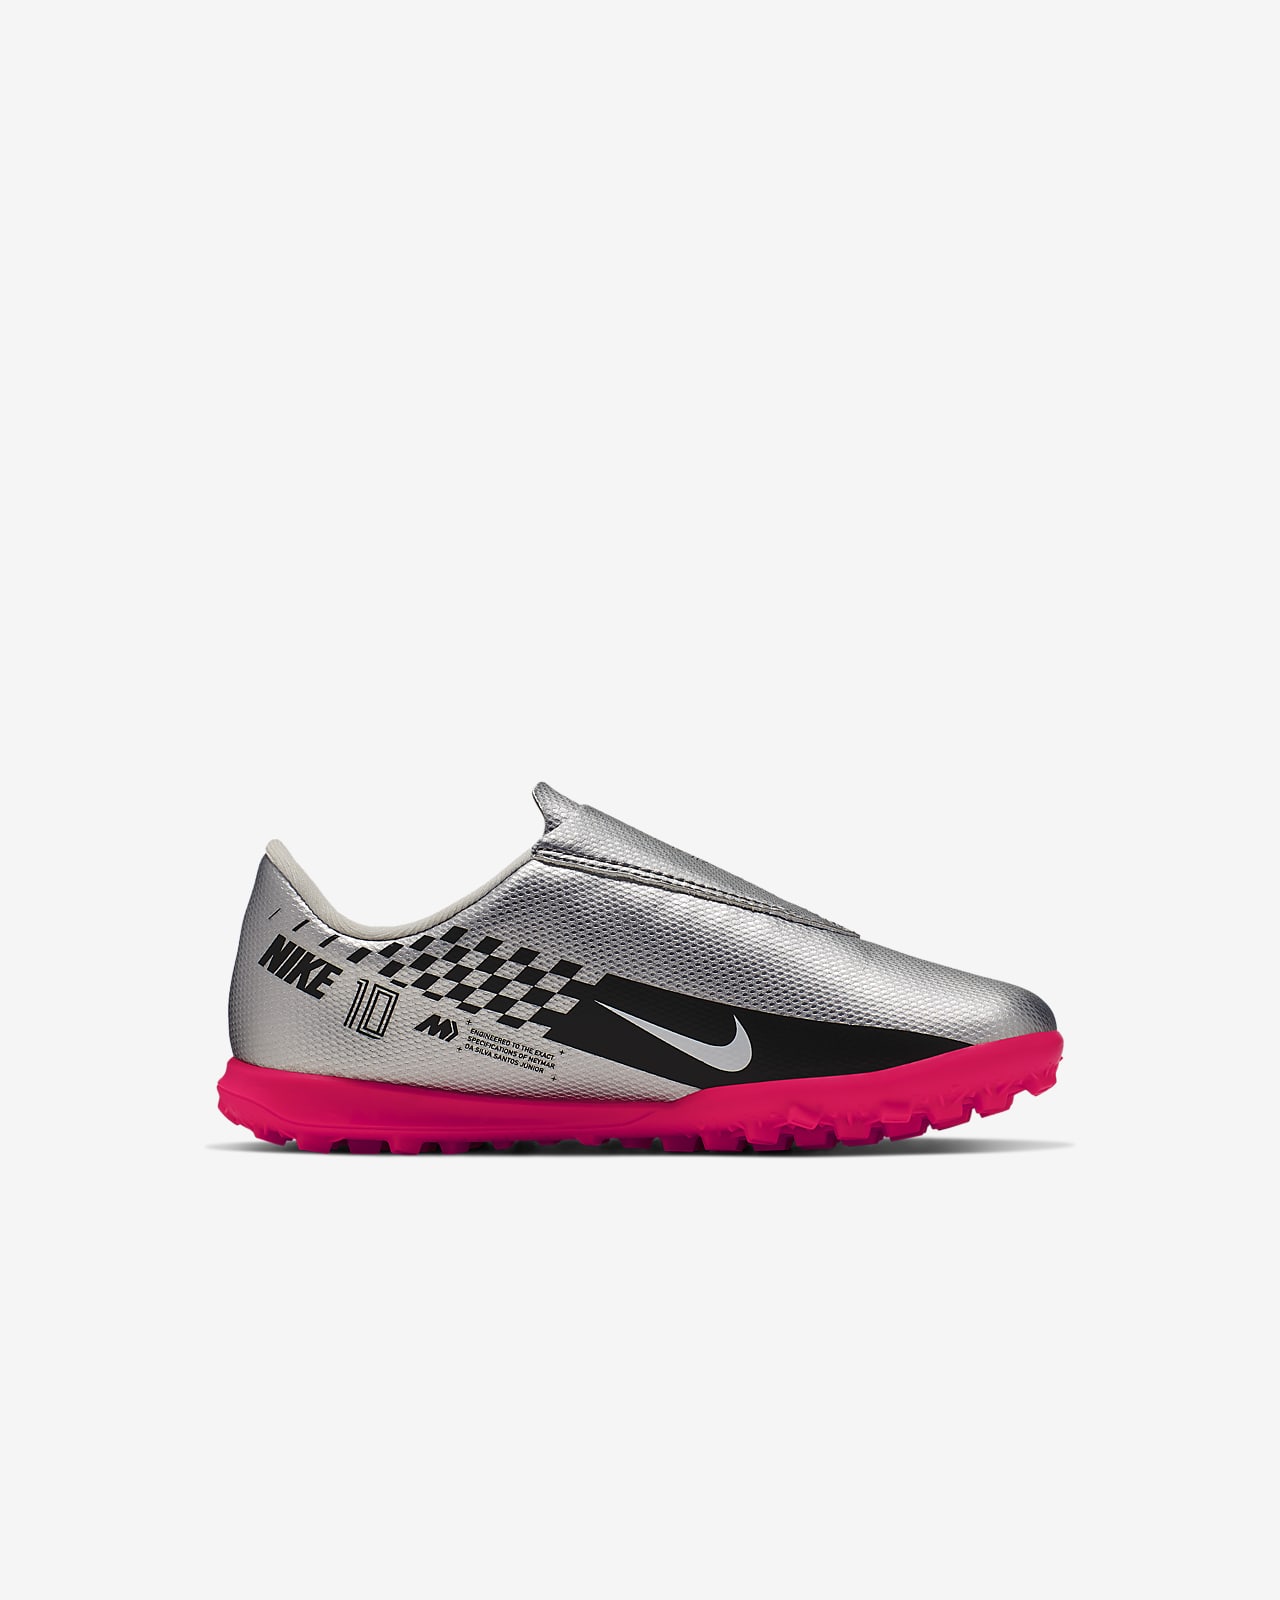 neymar pink shoes